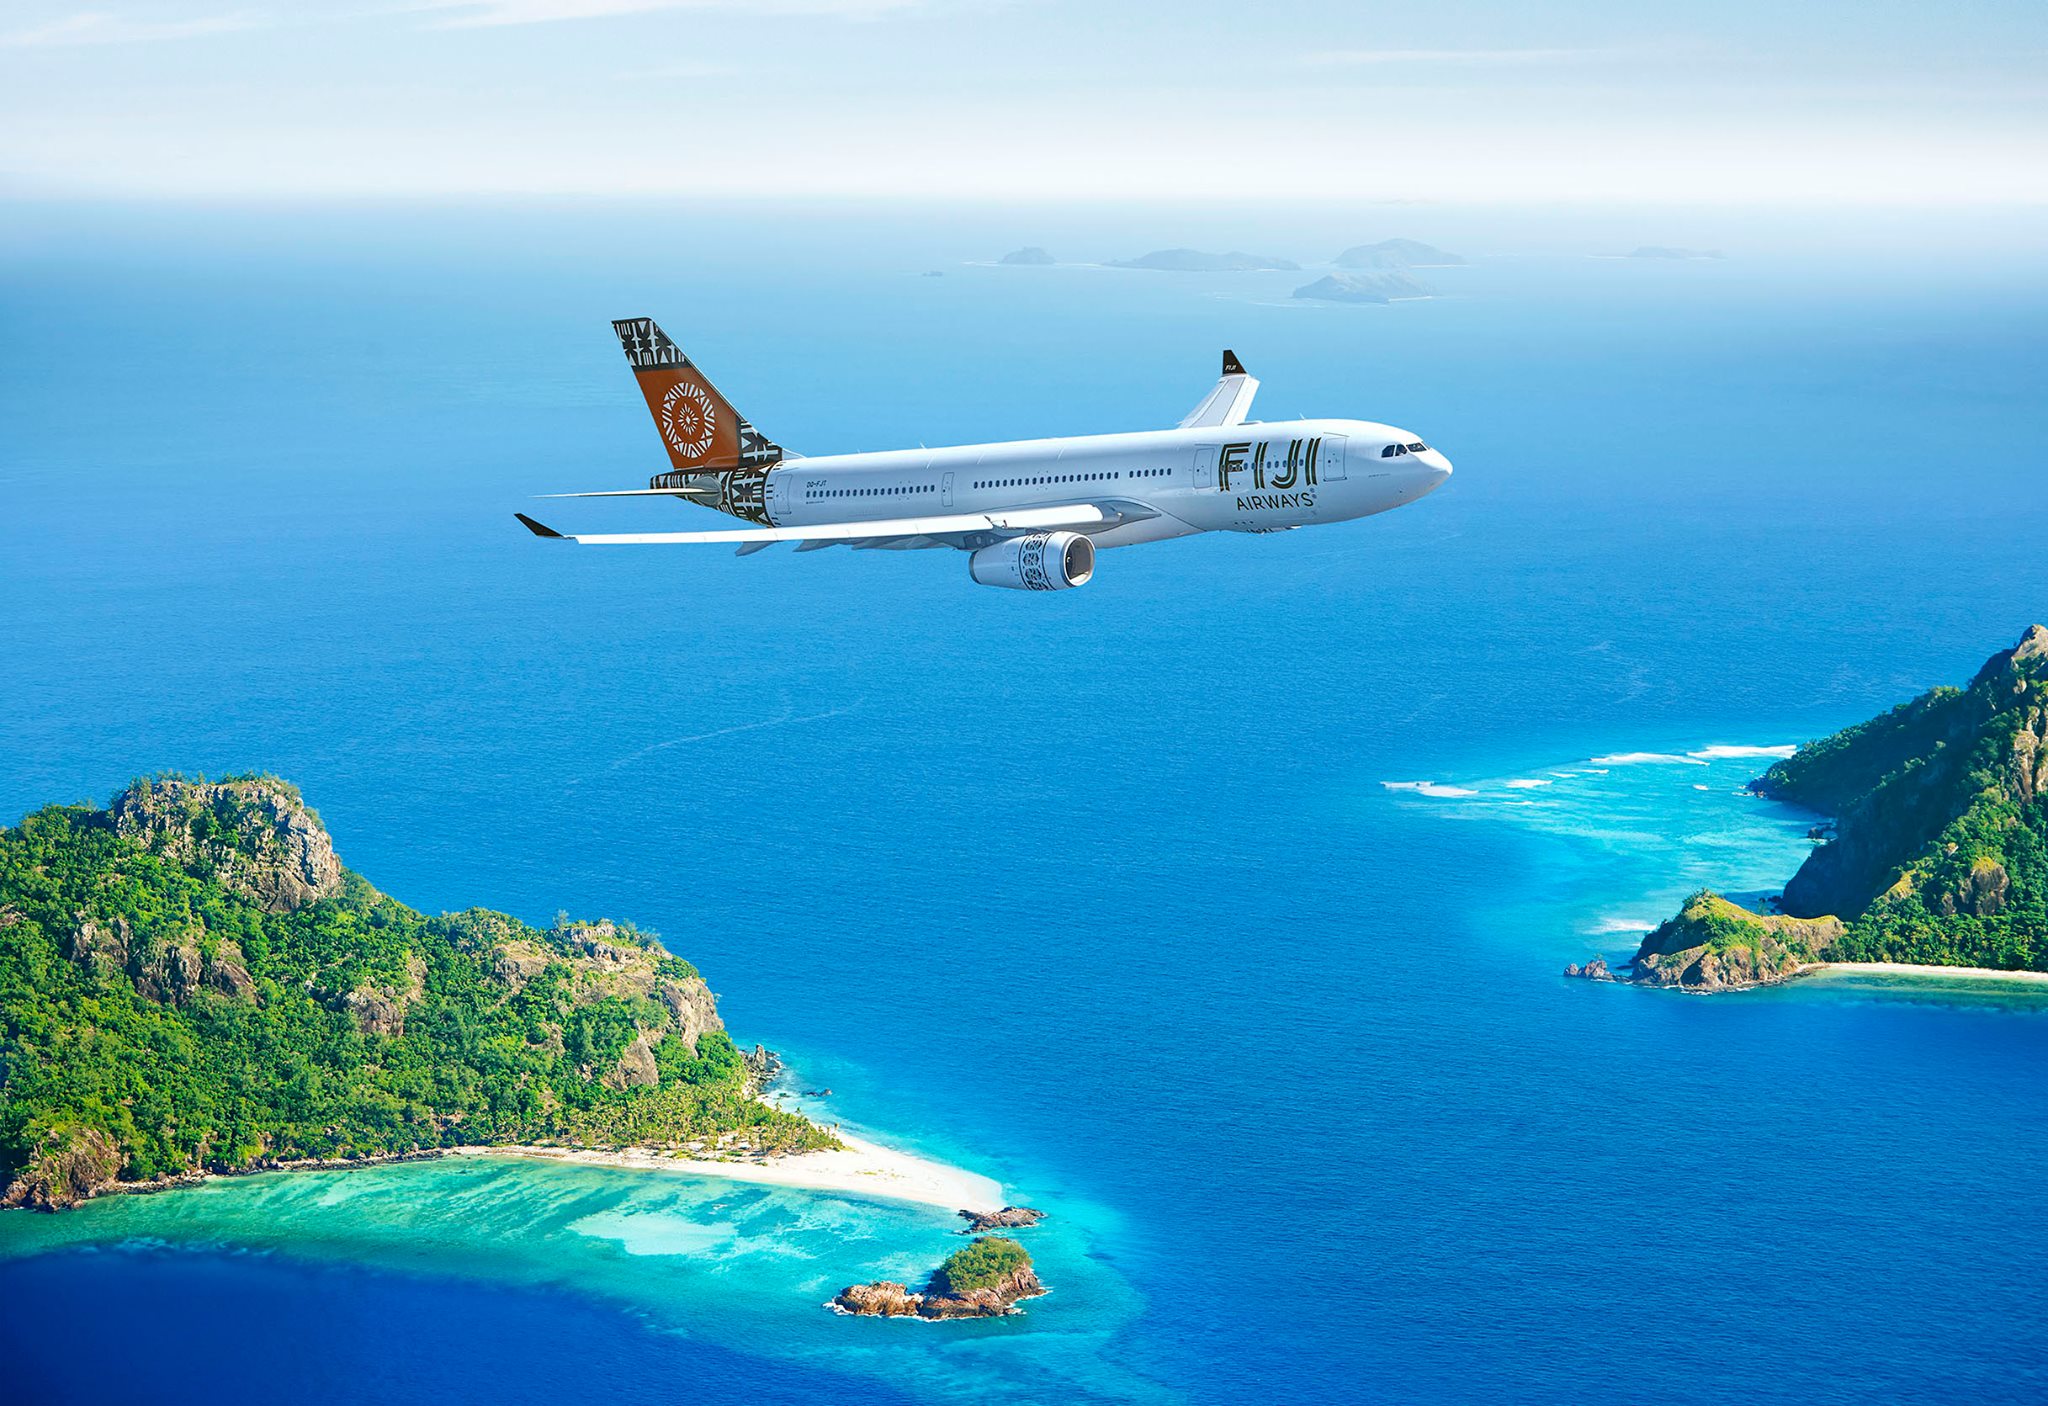 Fiji Airways' new look.